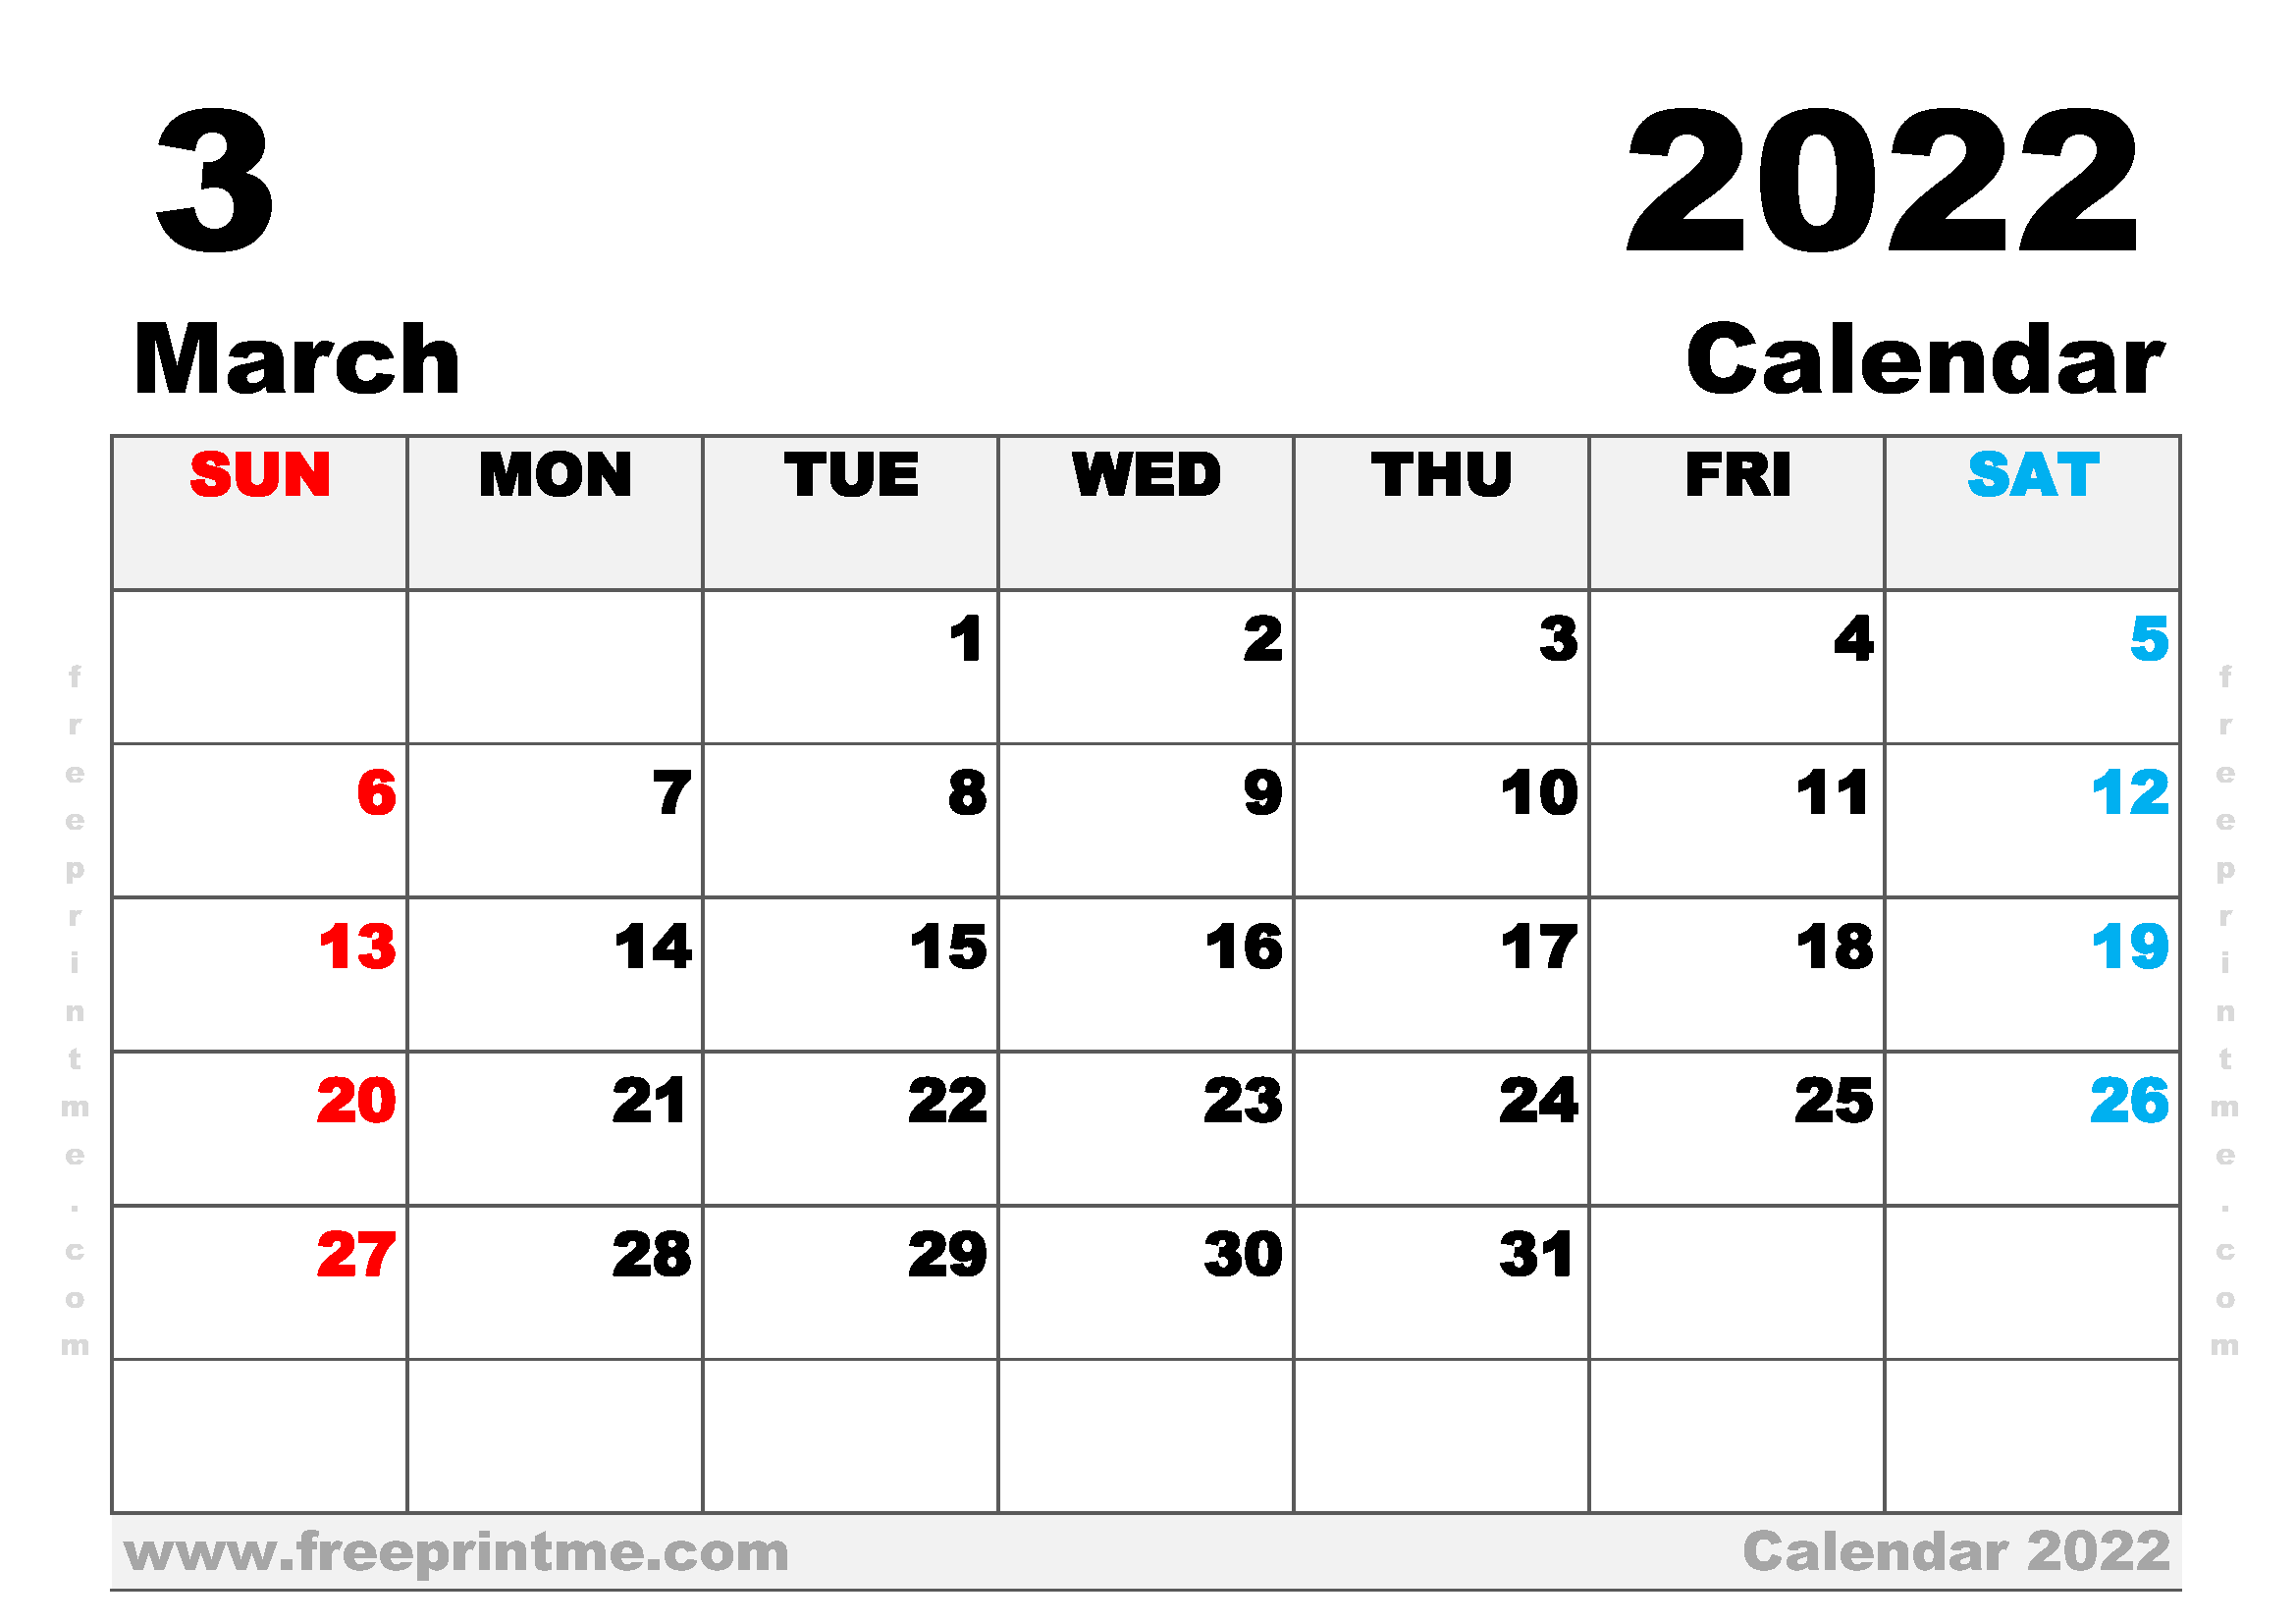 Mar 2022 Calendar Free Printable March 2022 Calendar A4 Wide